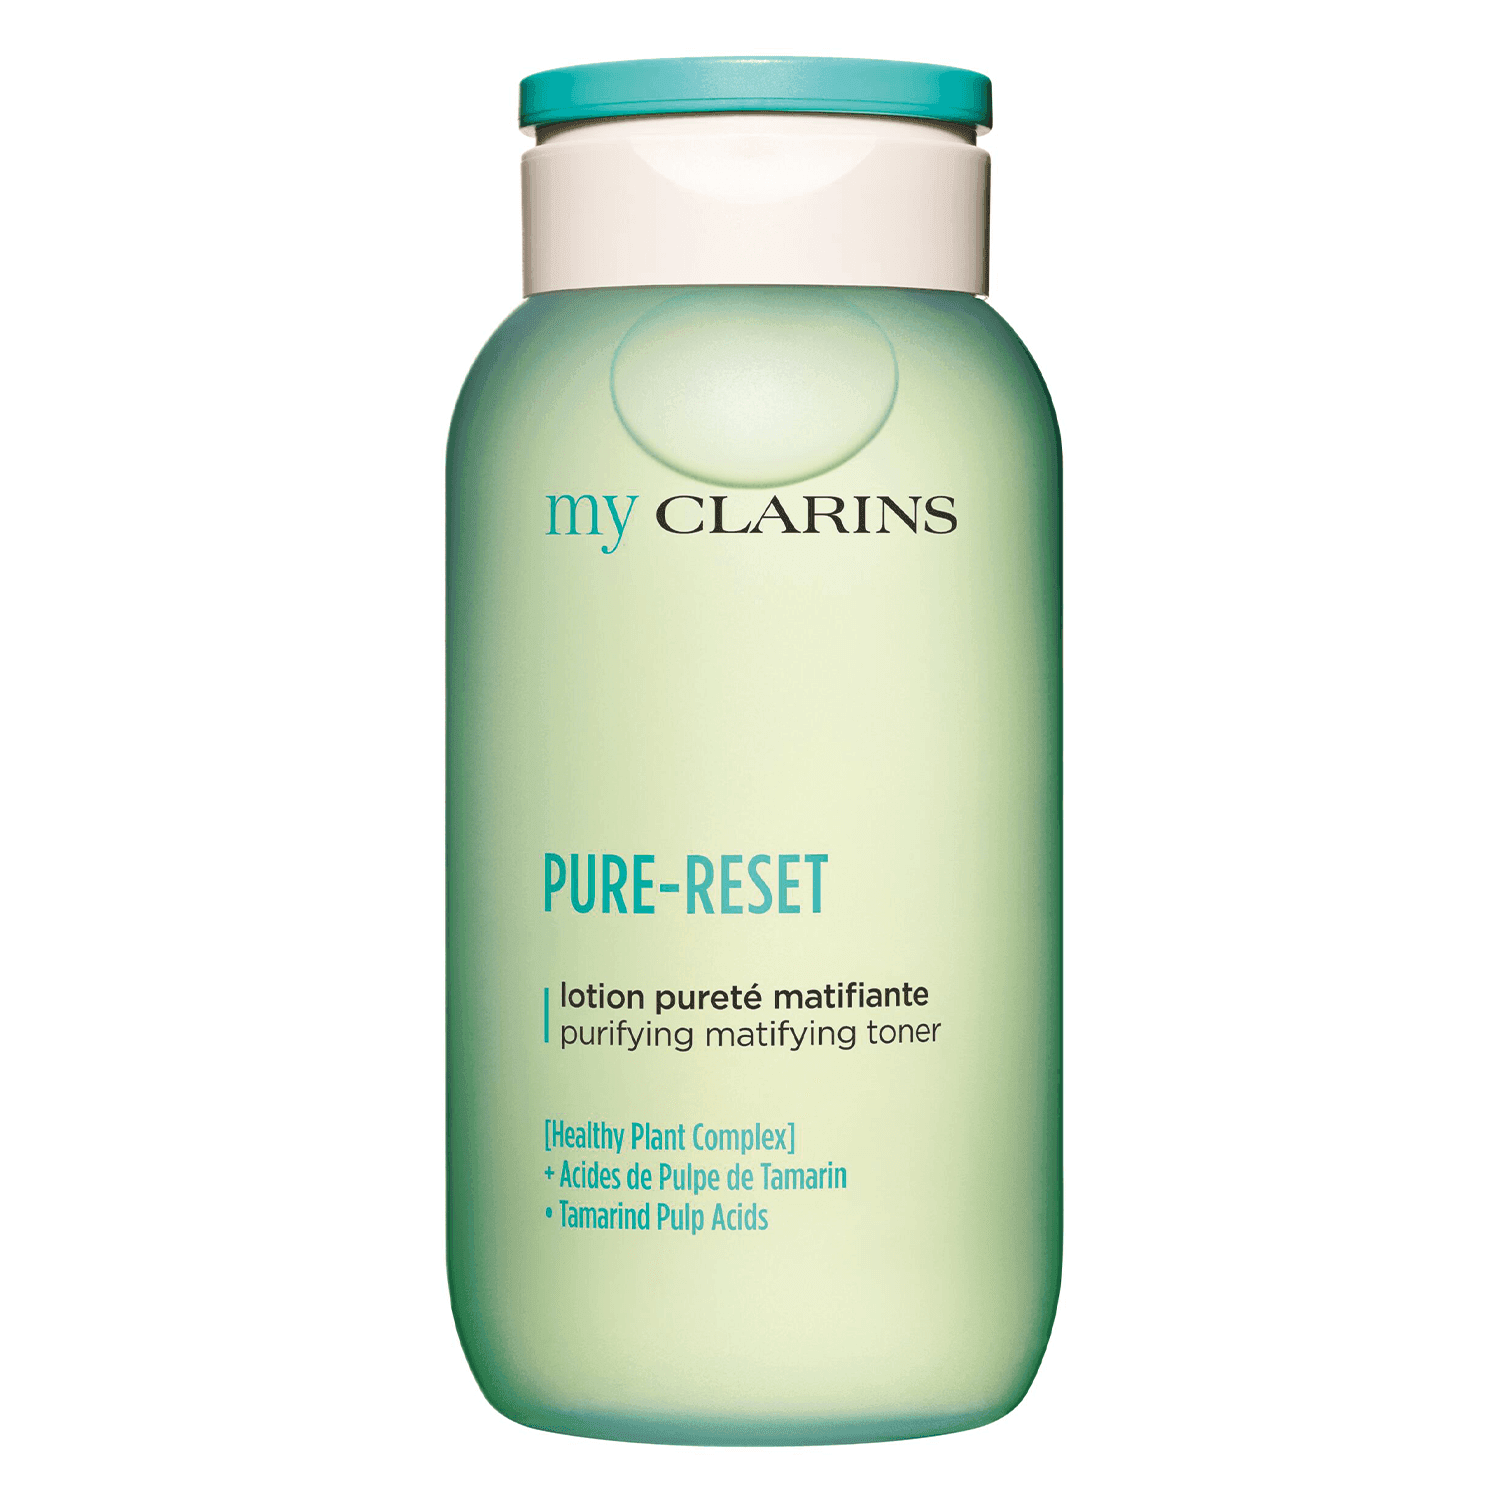 myClarins - PURE-RESET lotion pureté matifiante